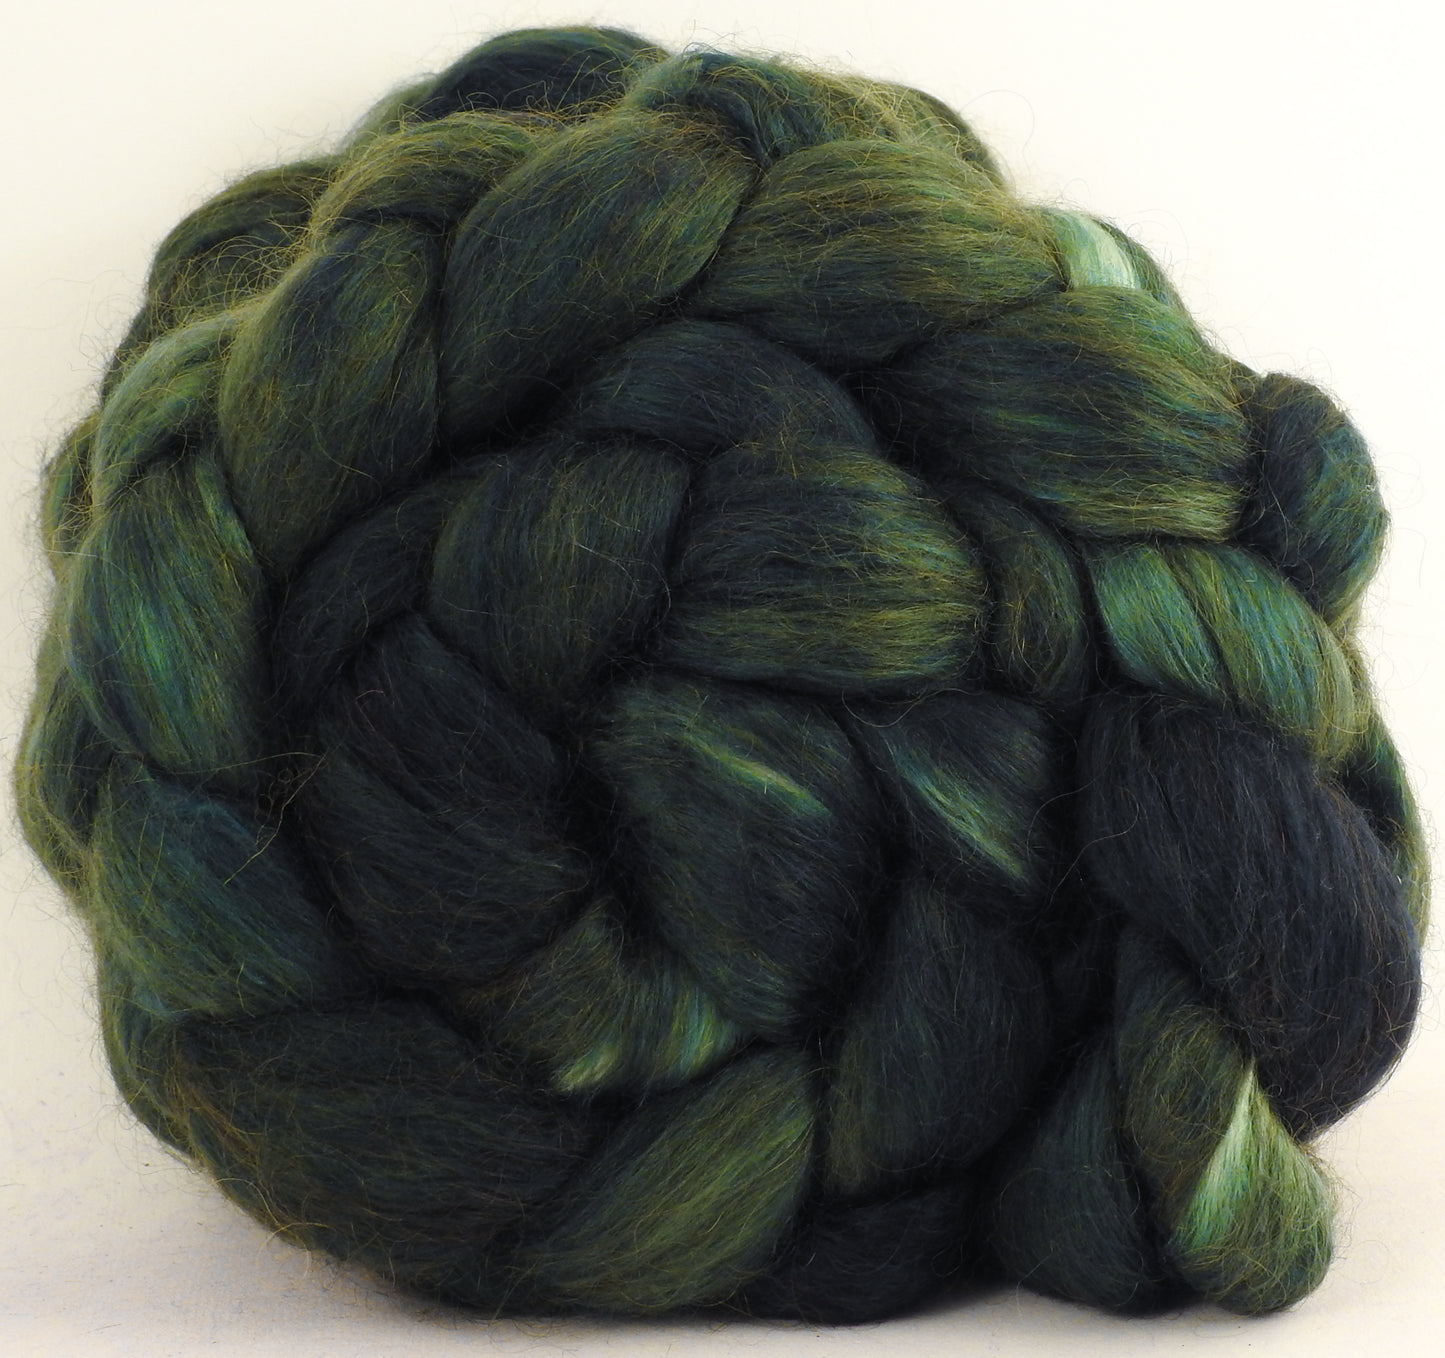 Zucchini - Wensleydale/ Mulberry silk roving (65/35)